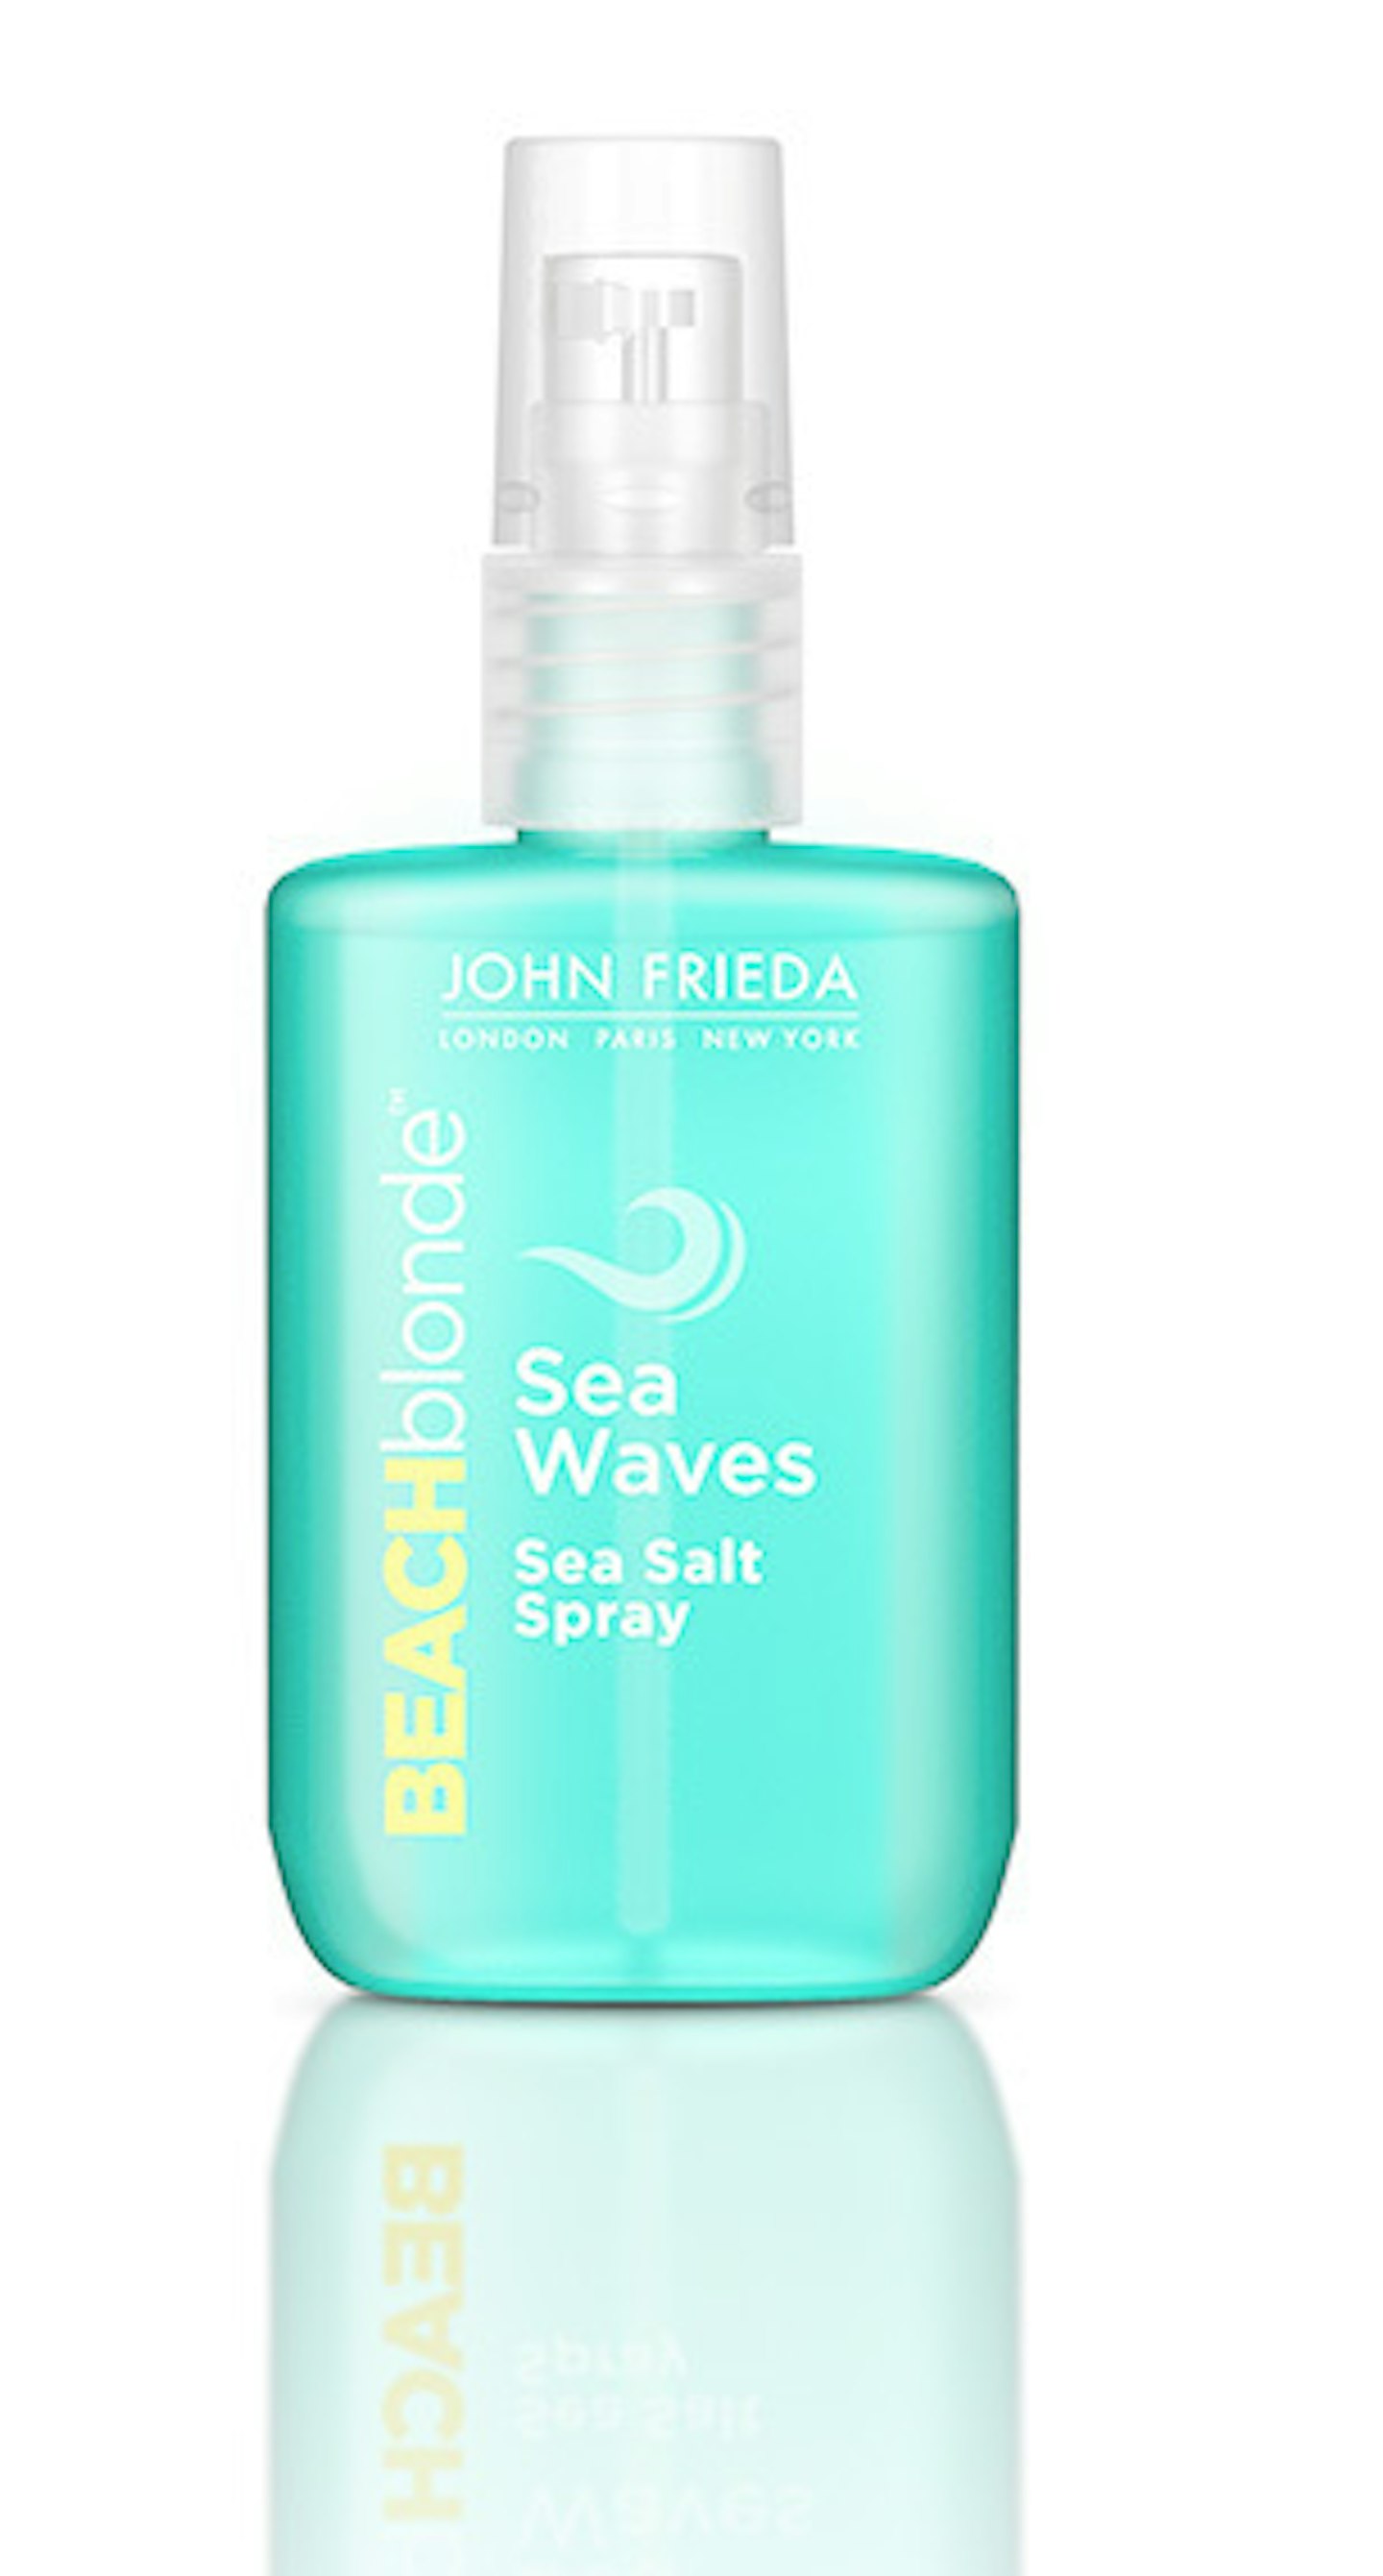 John Frieda Mini Beach Blonde Sea Waves Sea Salt Spray £1.99